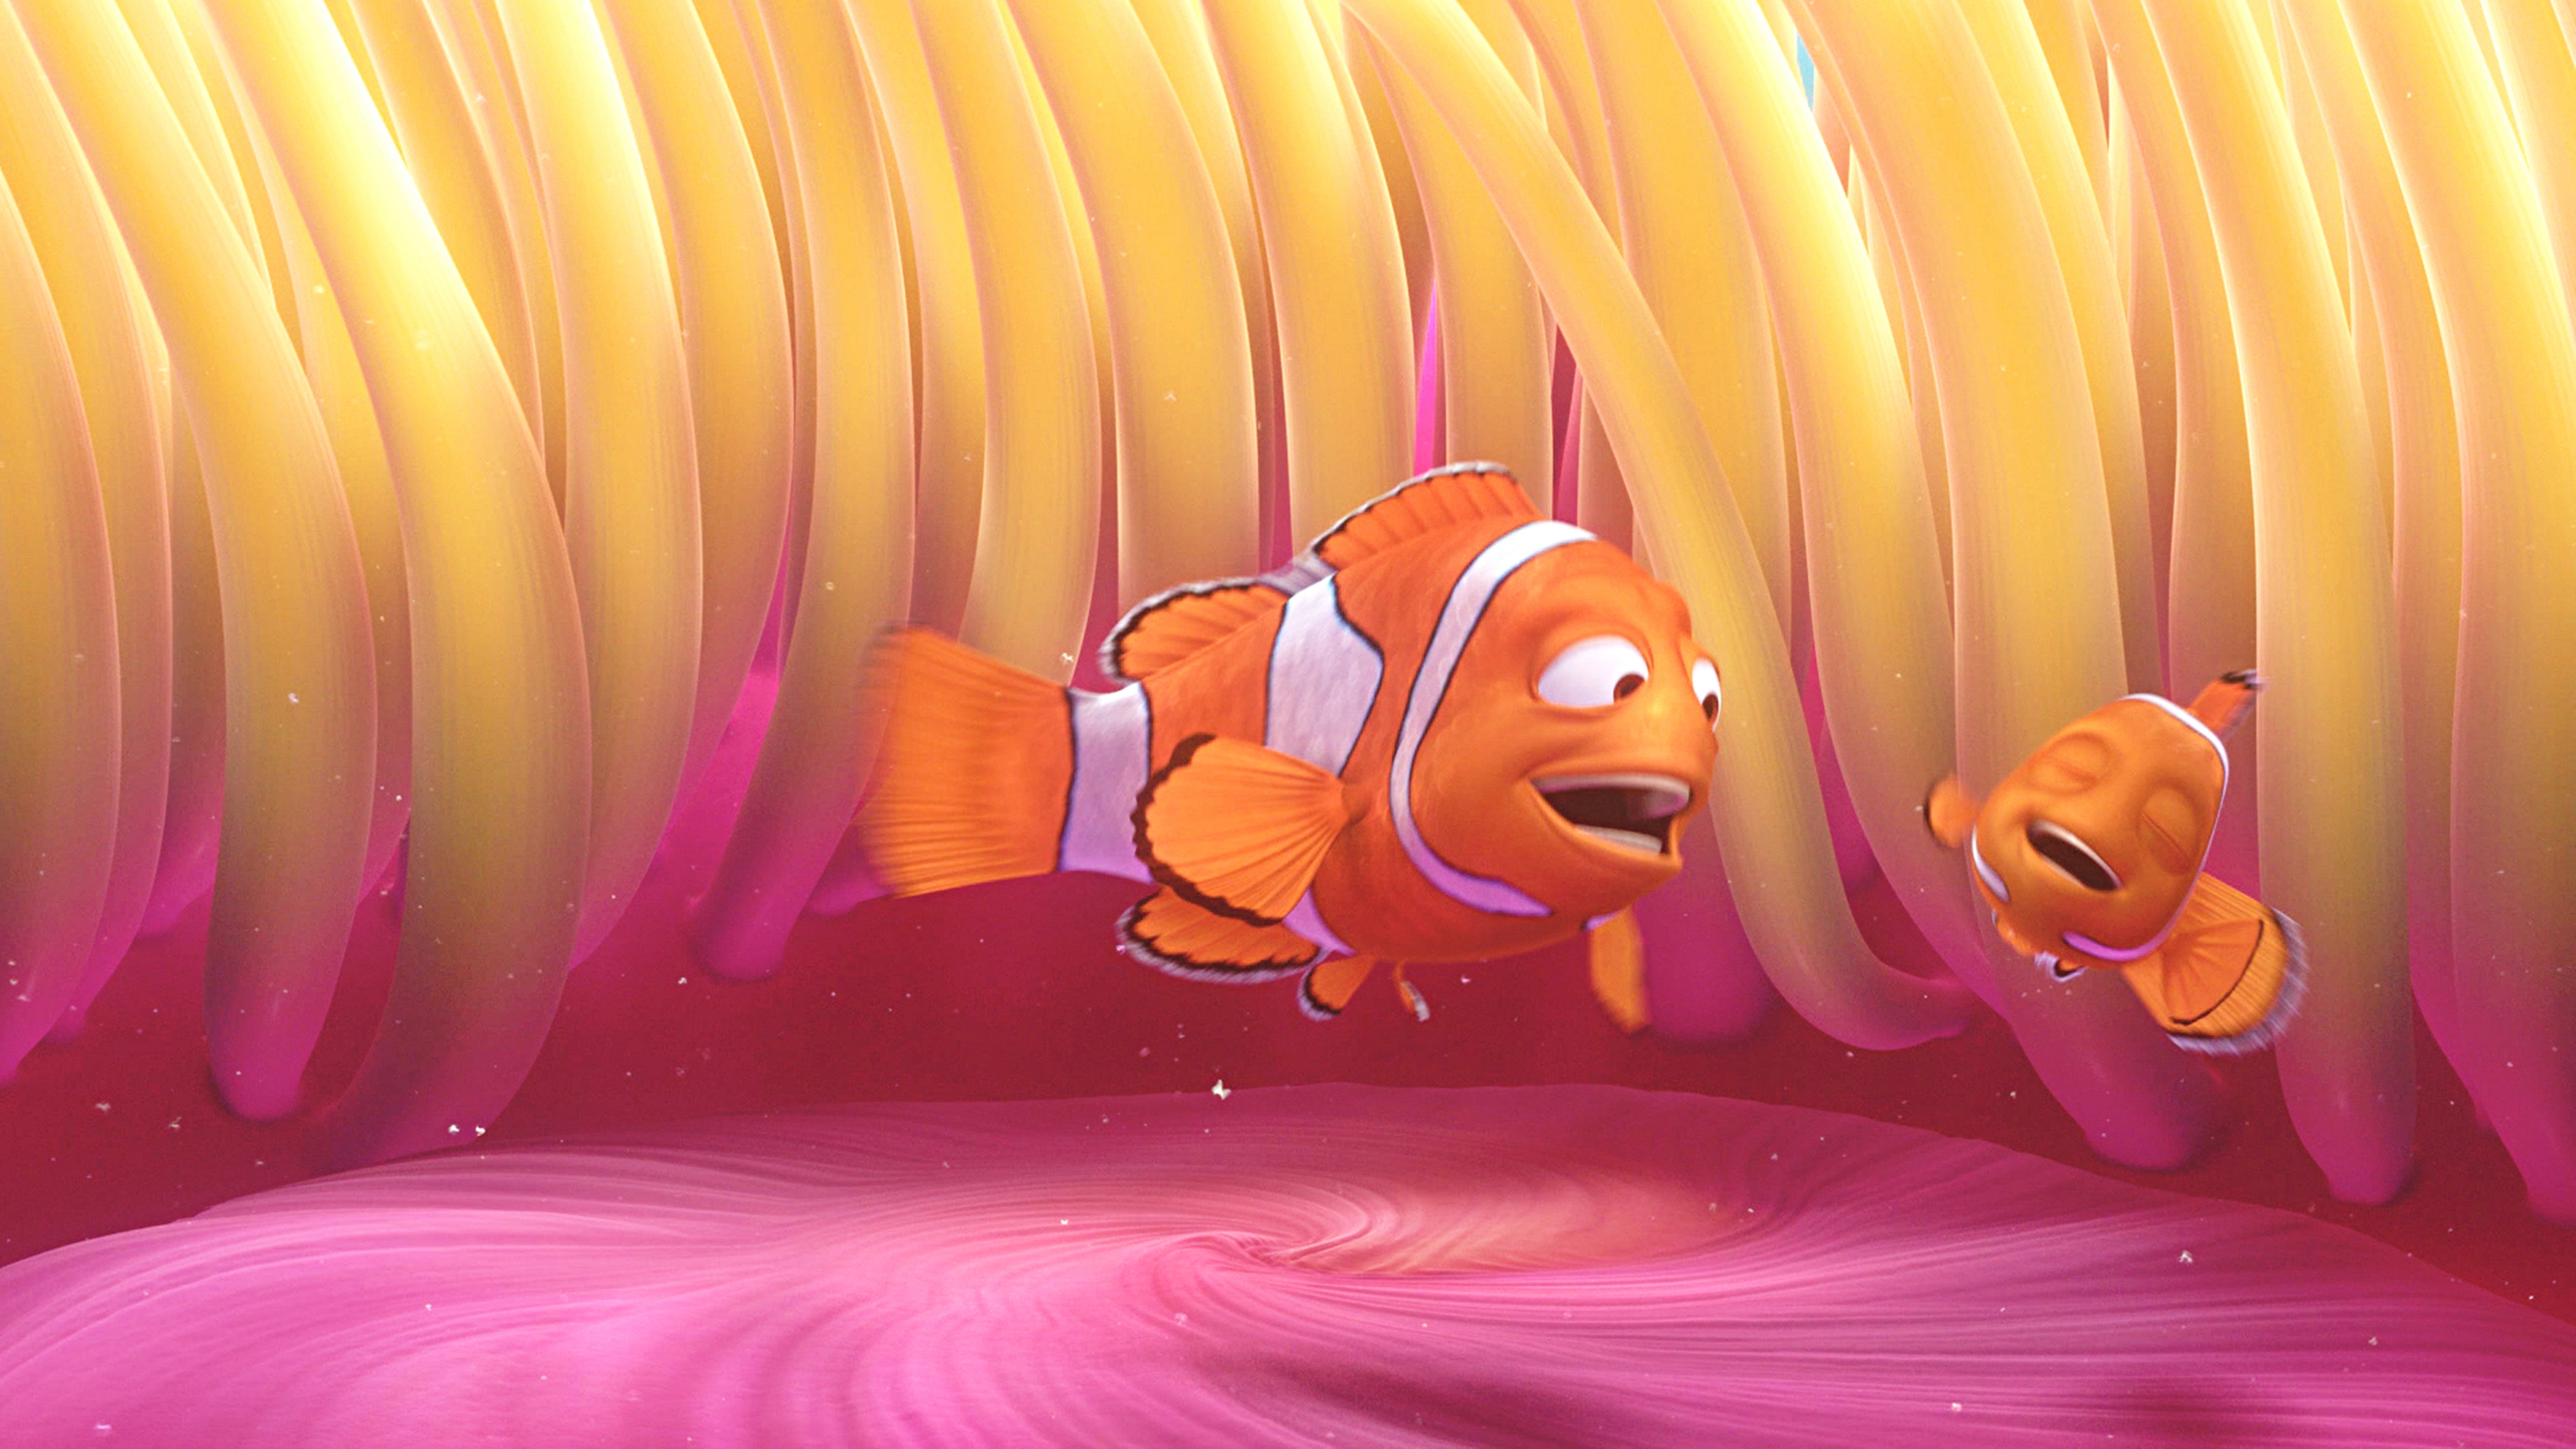 Disney*Pixar Screencapture of marlin and Nemo from "Finding Nemo"...